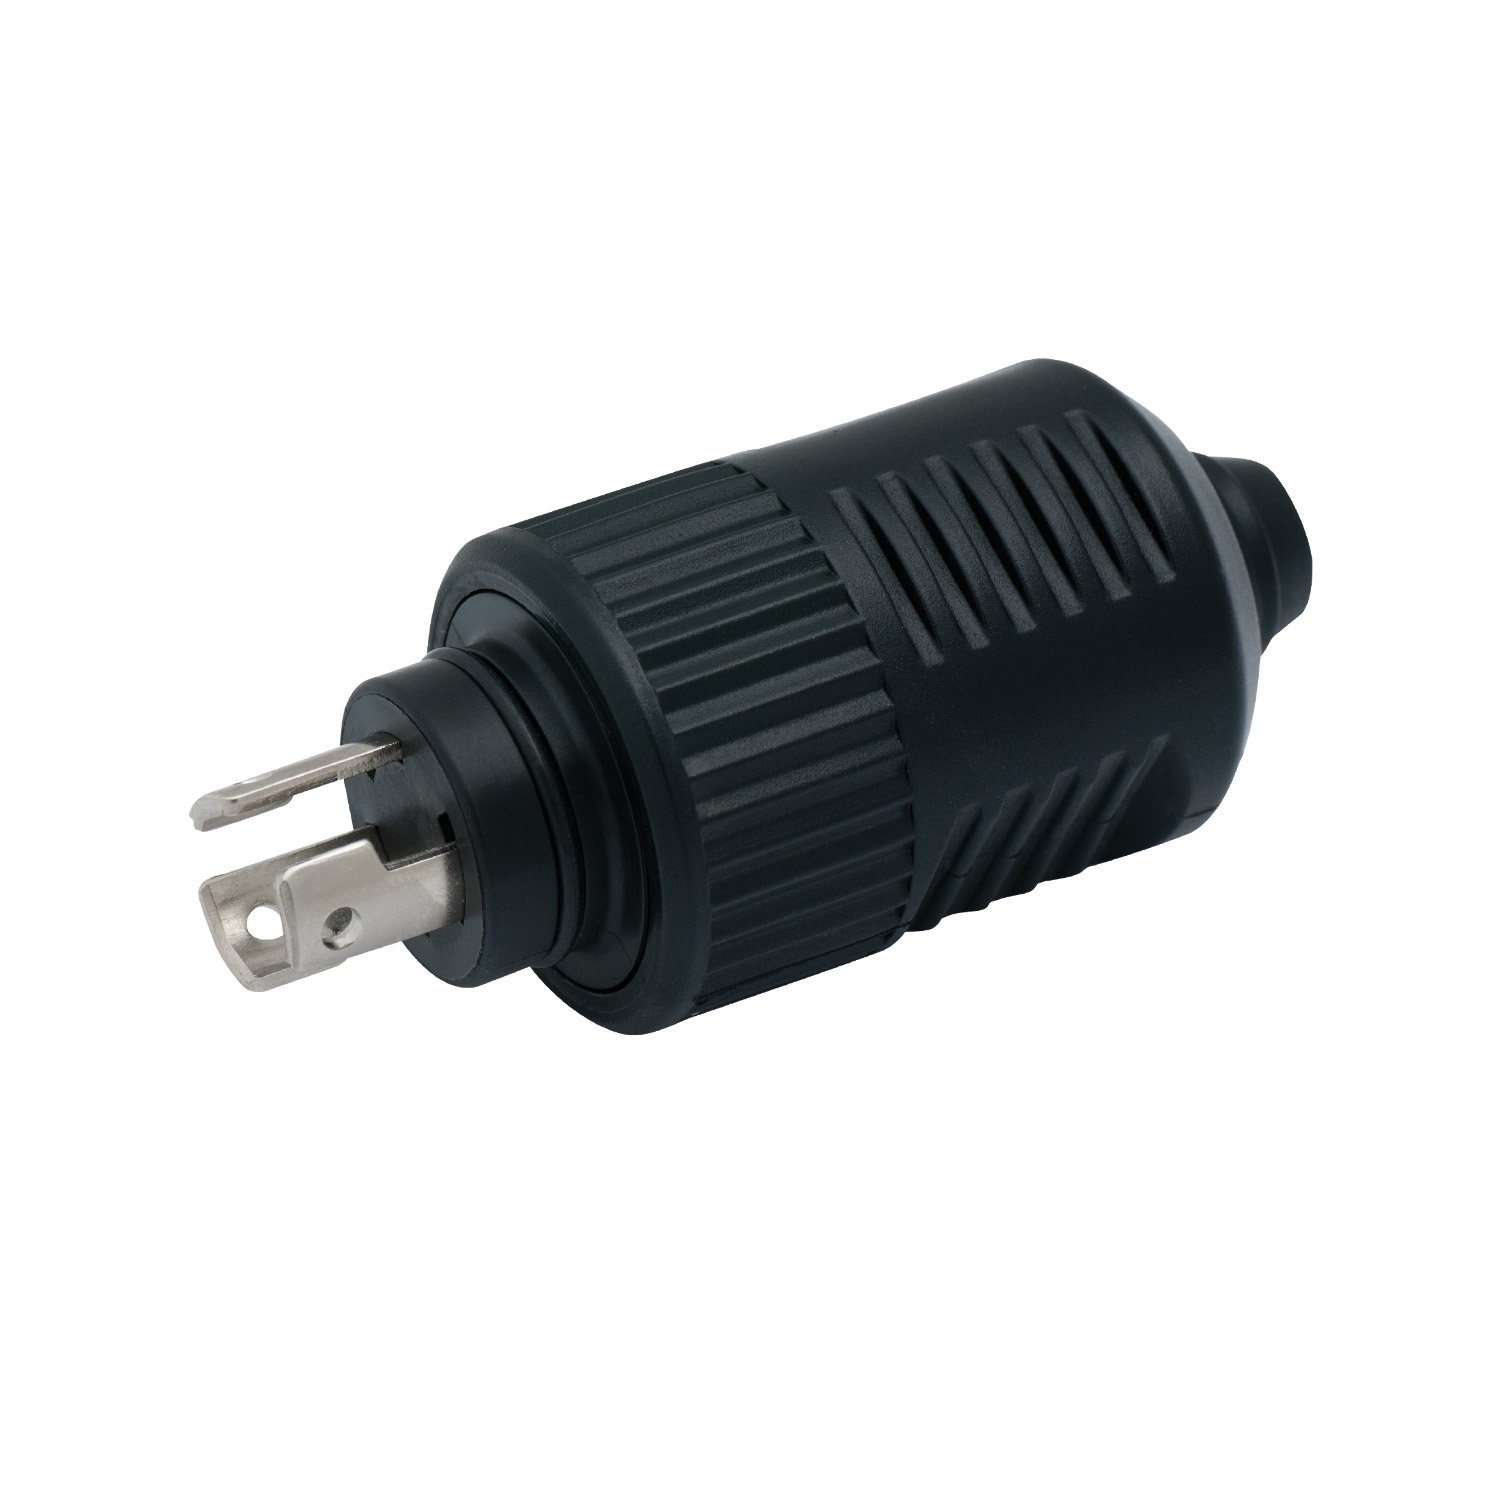 ConnectPro Plug